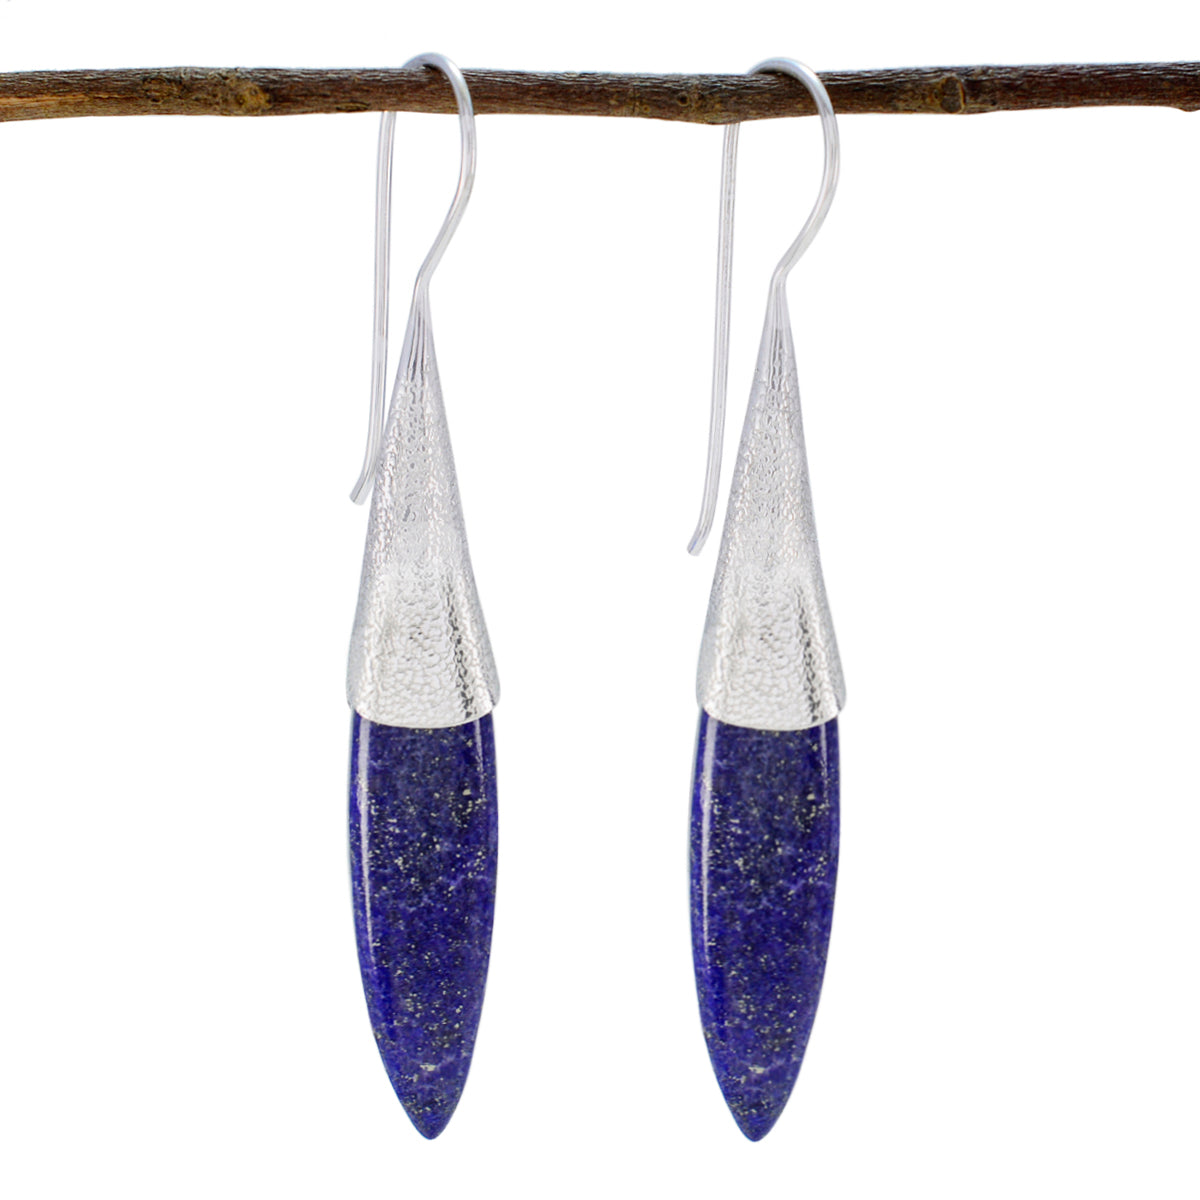 Riyo Nice Gemstone fancy Cabochon Nevy Blue Lapis Lazuli Silver Earrings gift for sister